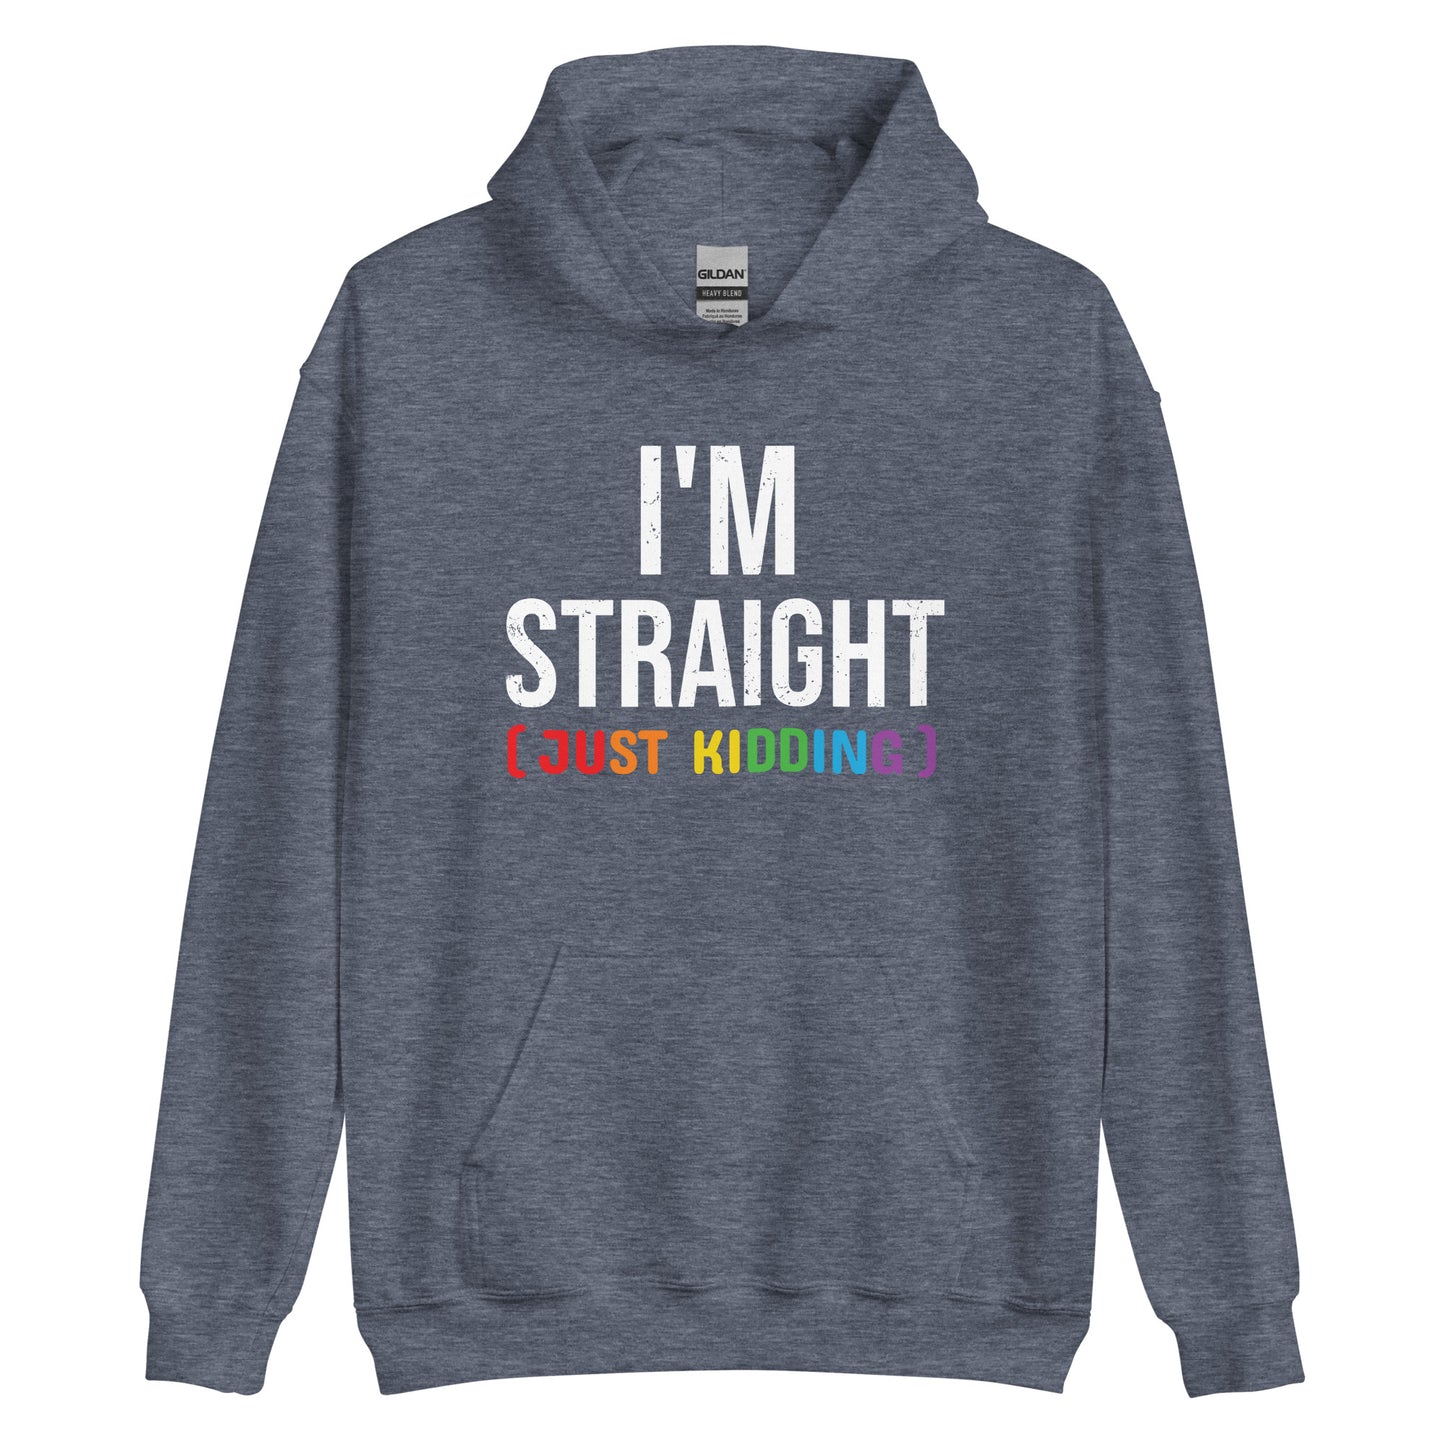 I'M Straight Just Kidding Unisex LGBTQ Pride Hoodie